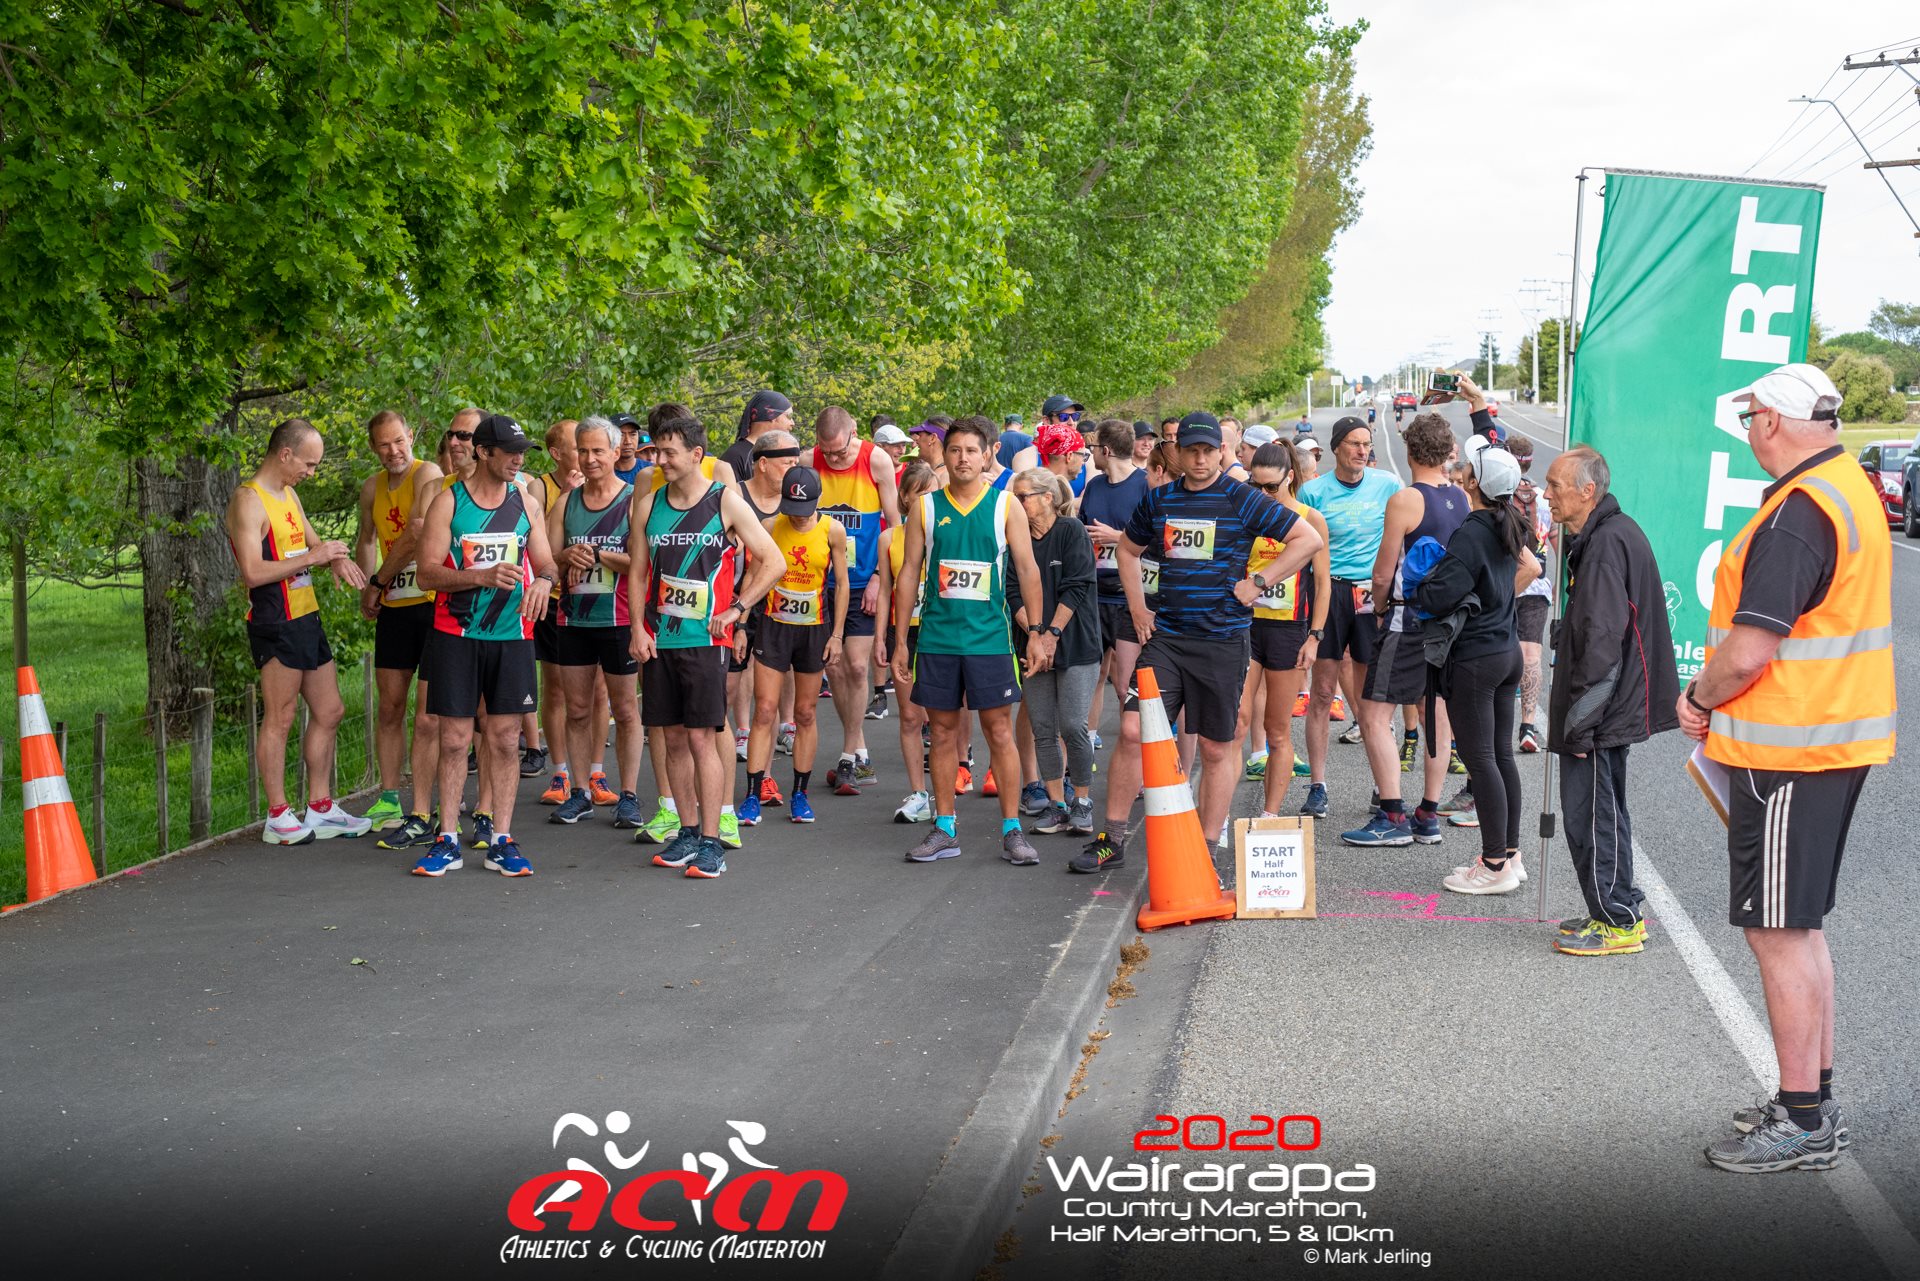 Wairarapa Country Marathon (full/half) & Fun Run 2021